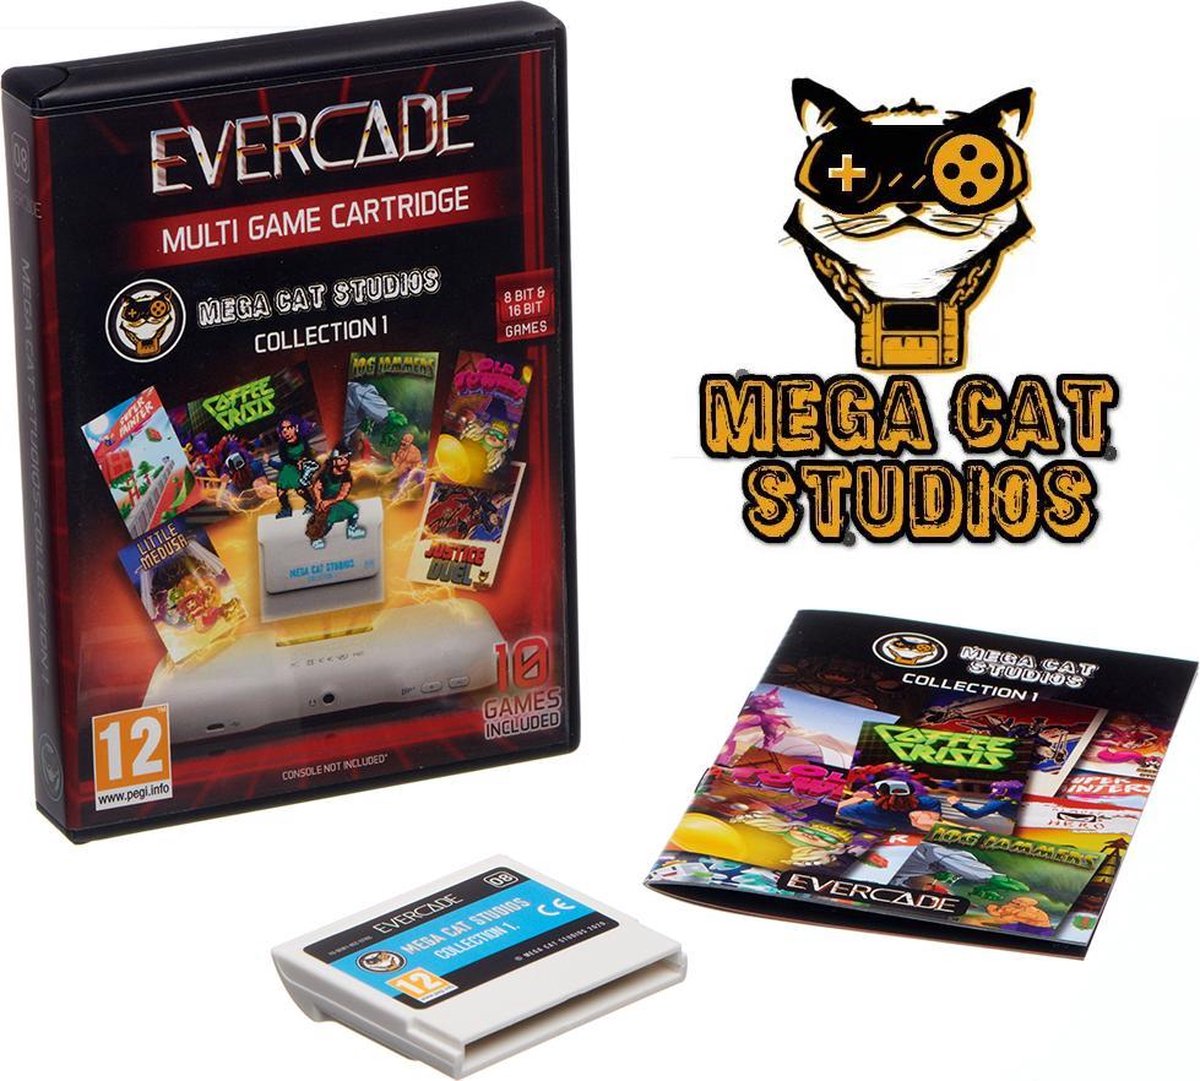 Evercade - Mega Cat Studios cartridge 1 - 10 games - Evercade